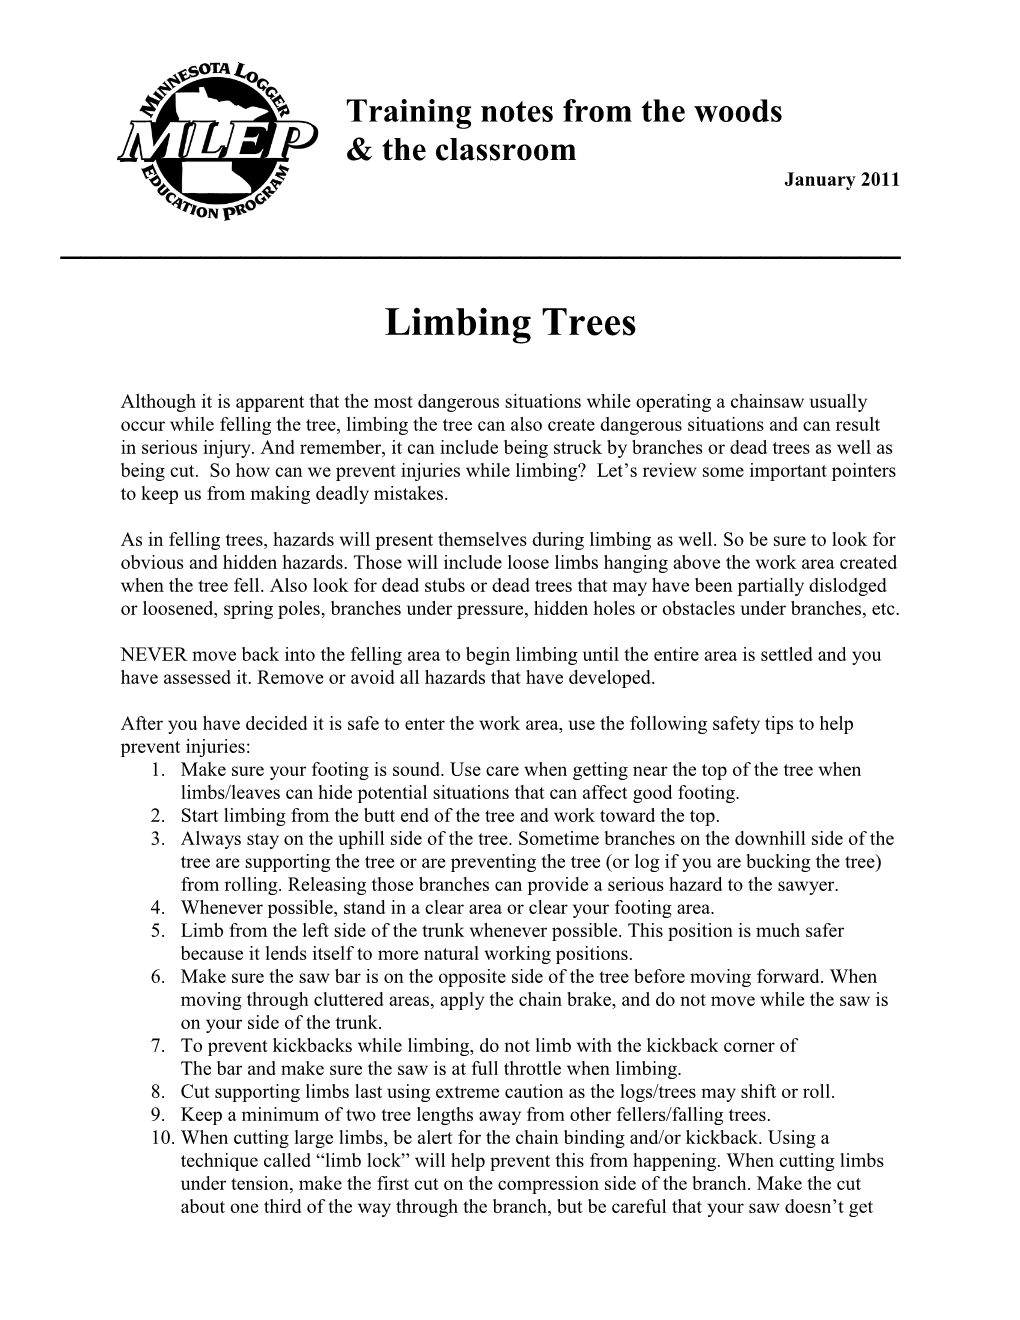 Limbing Trees